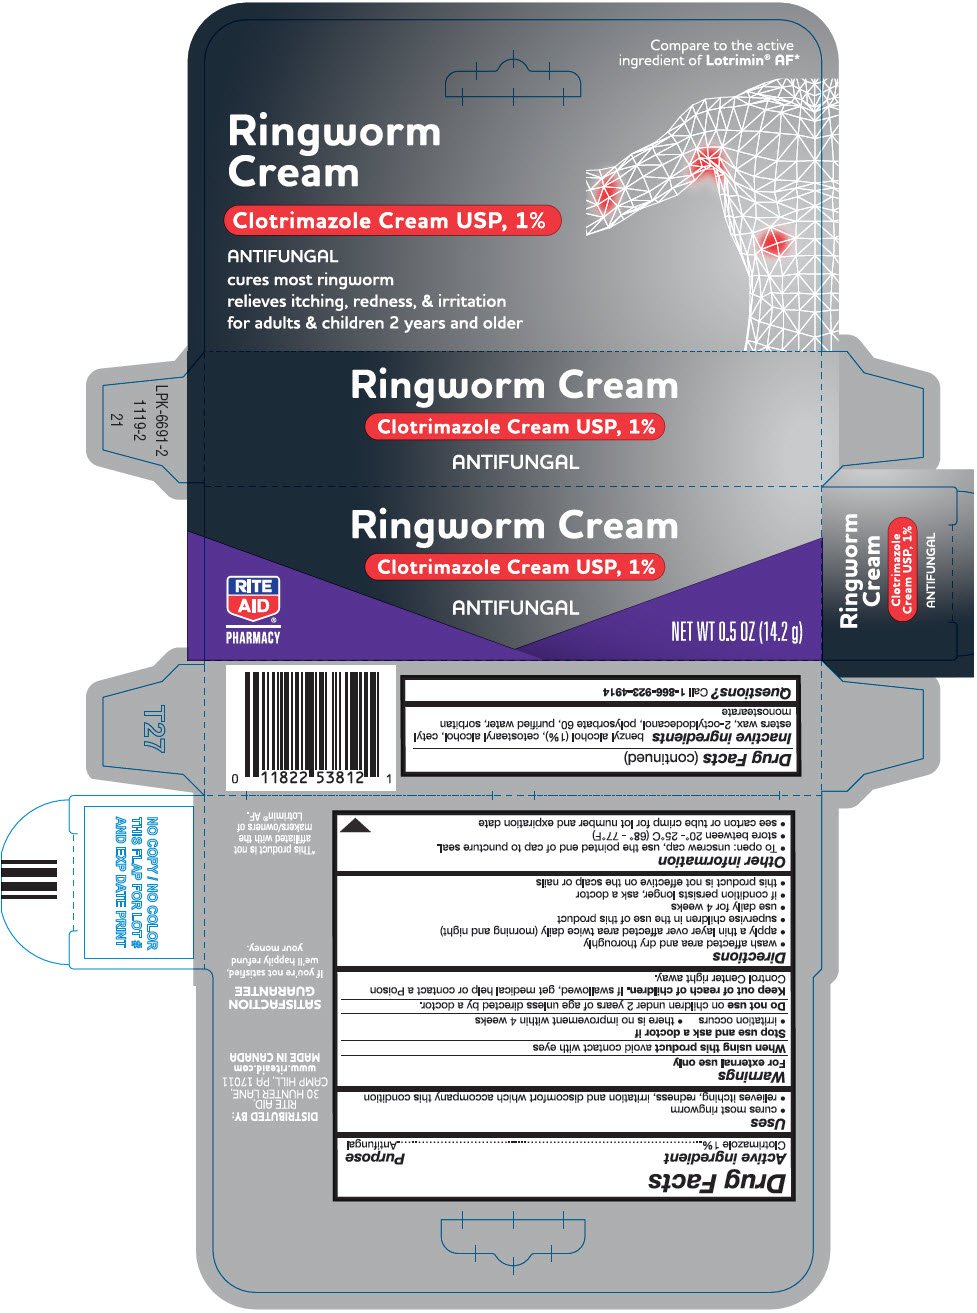 better antifungal cream for ringworm